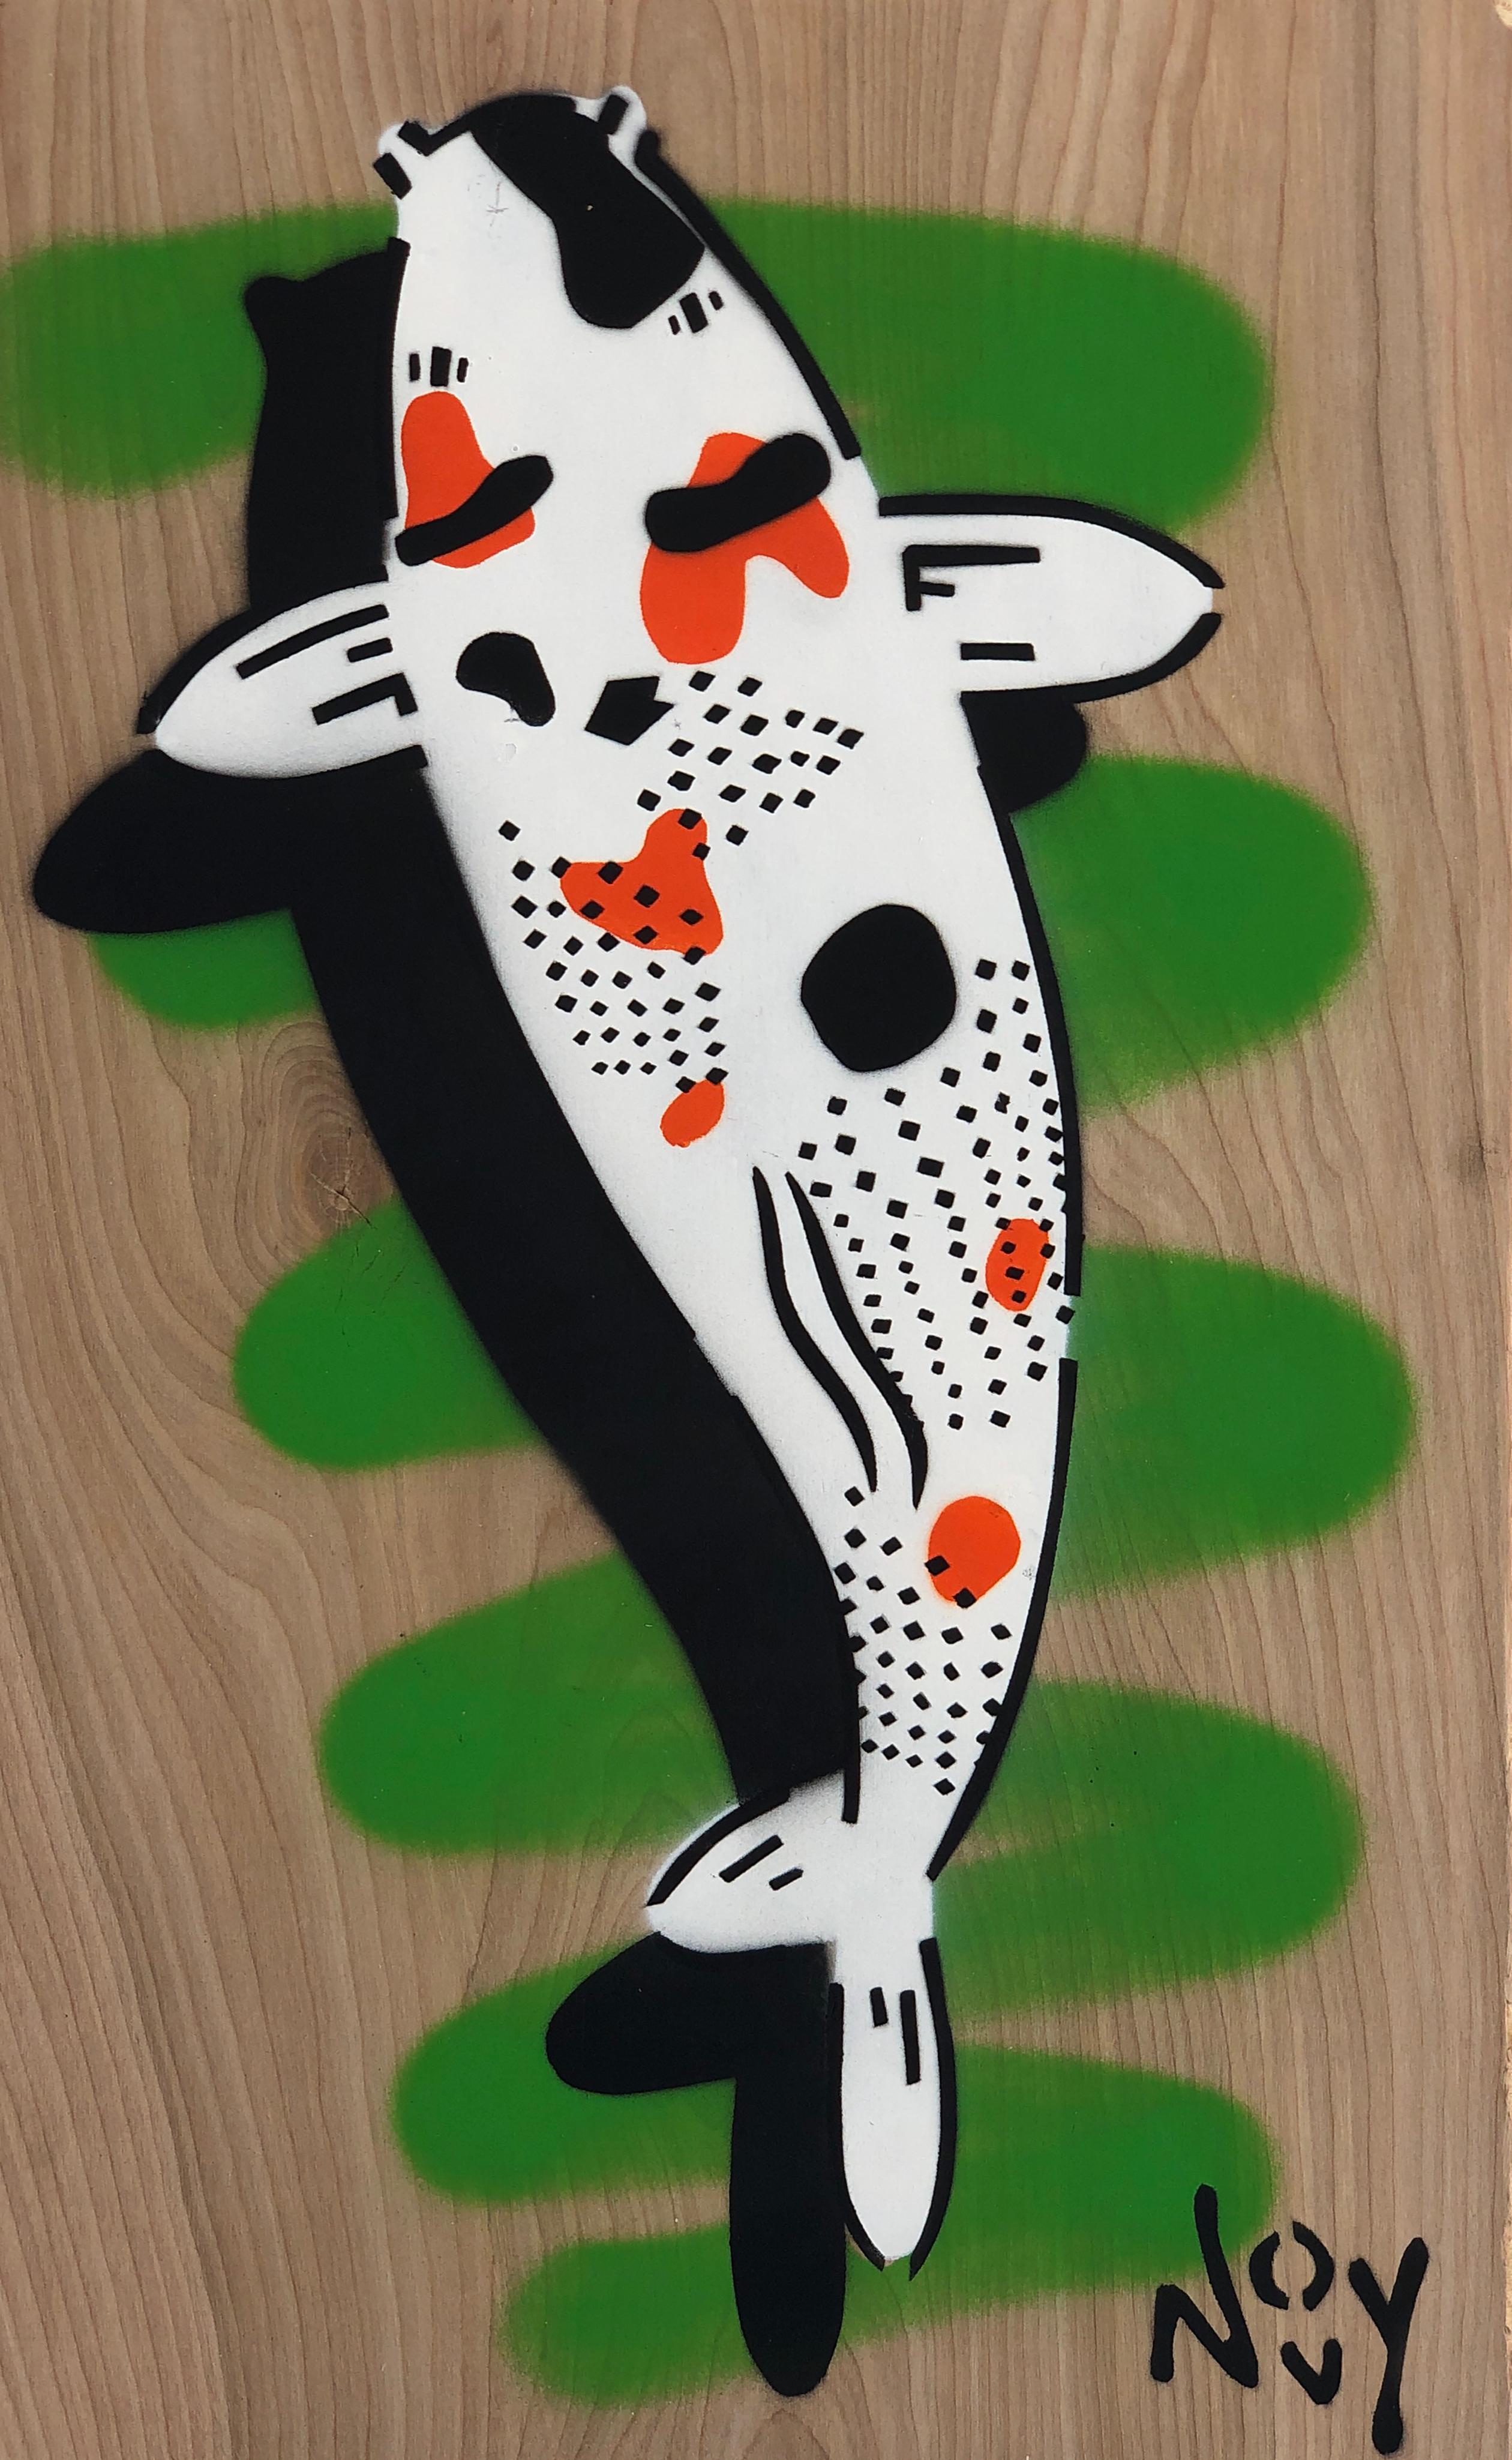 Jeremy Novy Animal Painting - " Green Koi 2"-Spray Paint on Wood 